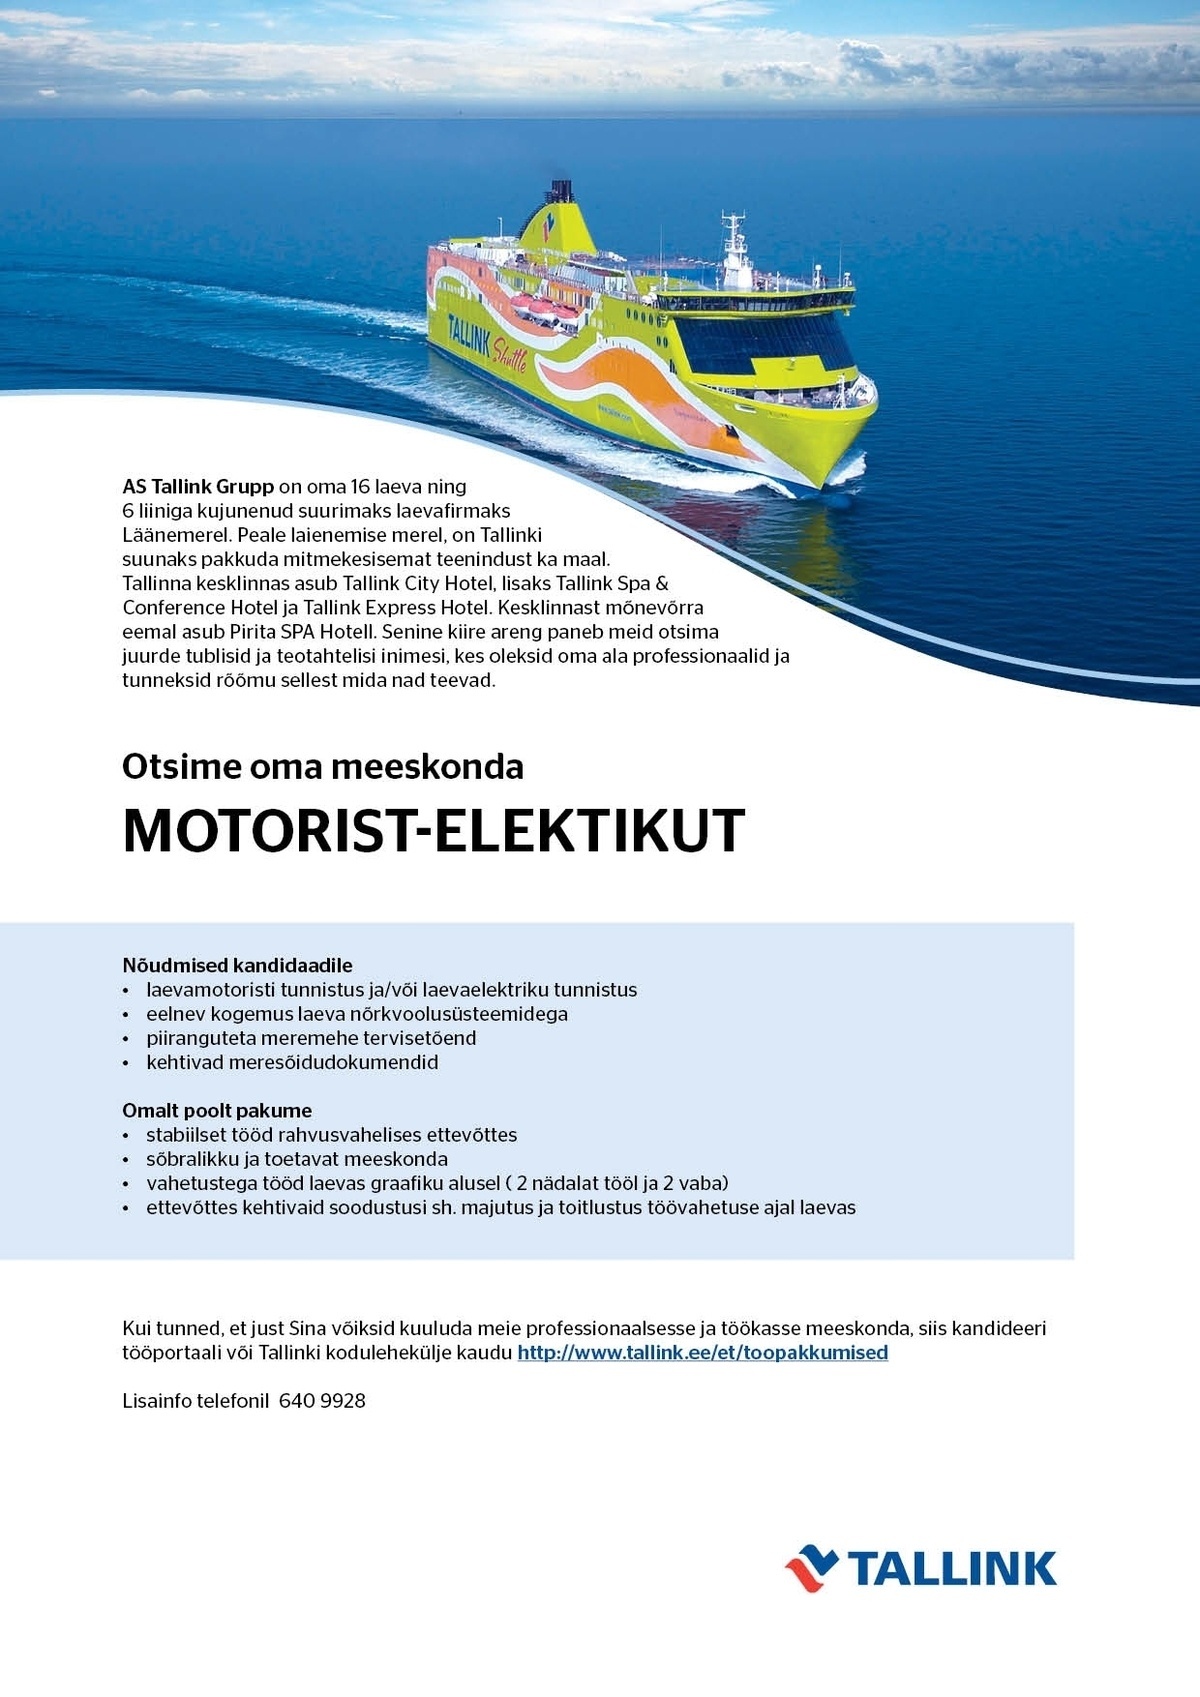 Tallink Grupp AS Motorist-elektrik